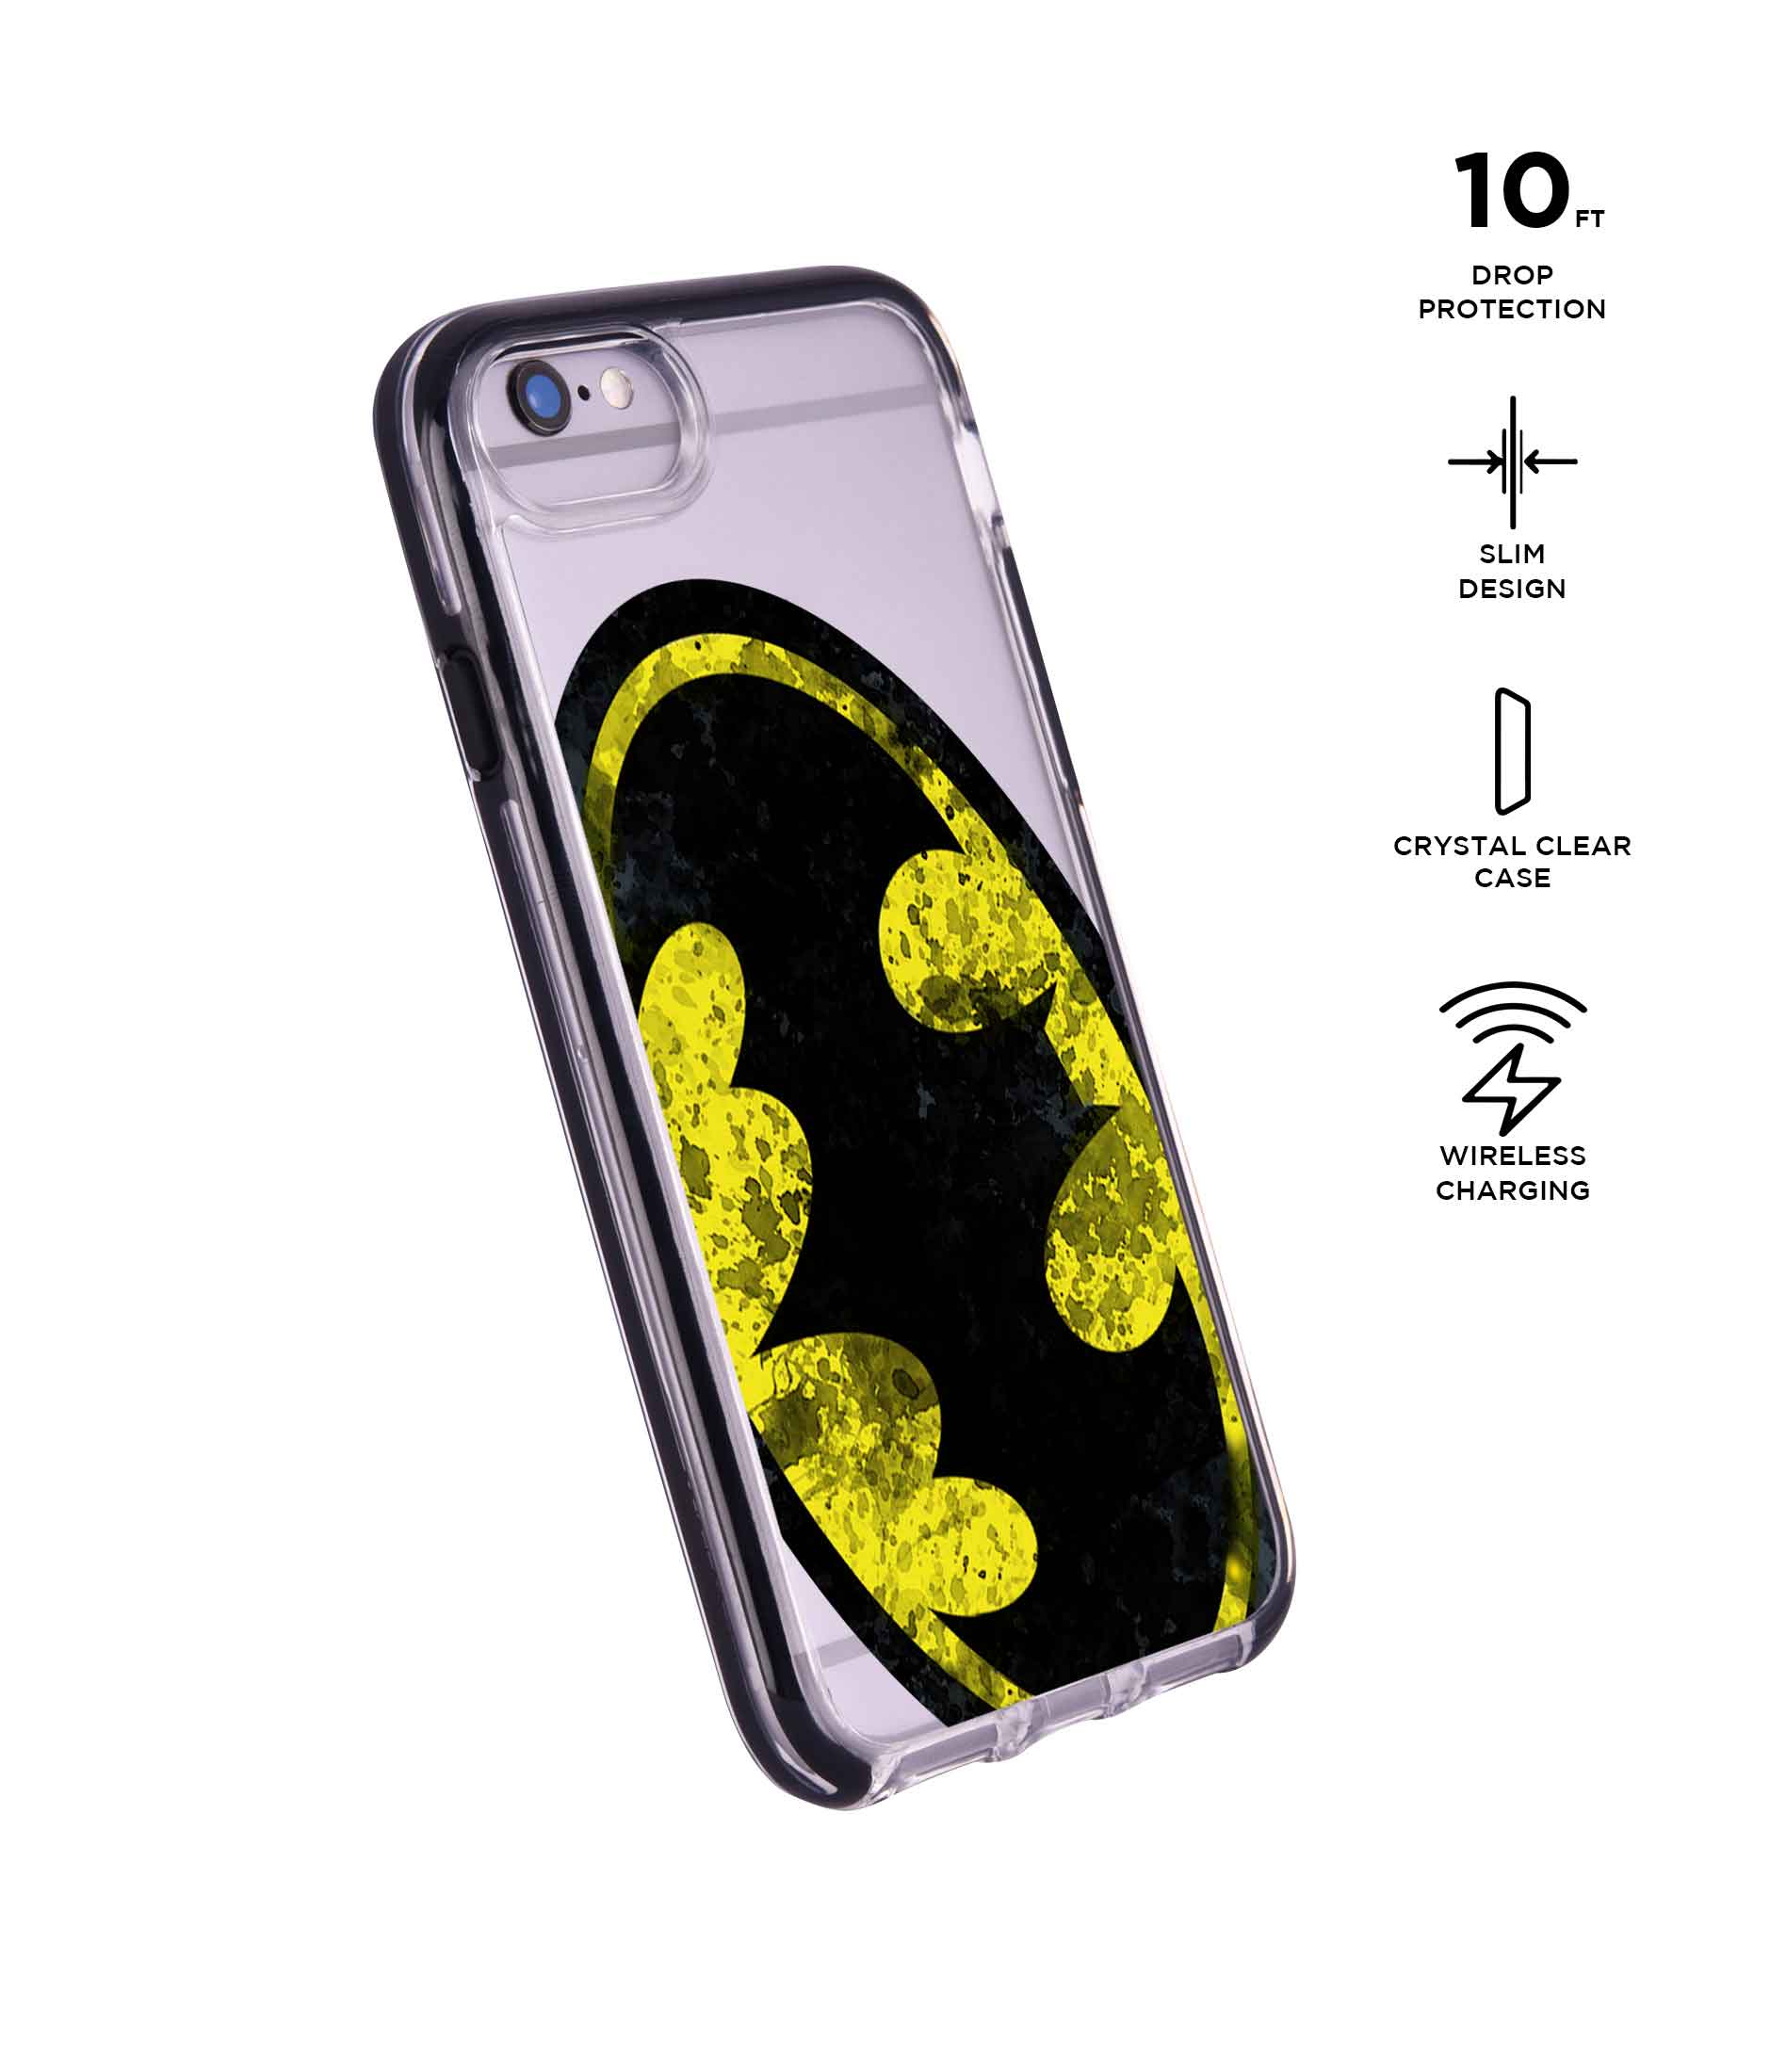 Batman Splatter - Extreme Phone Case for iPhone 6